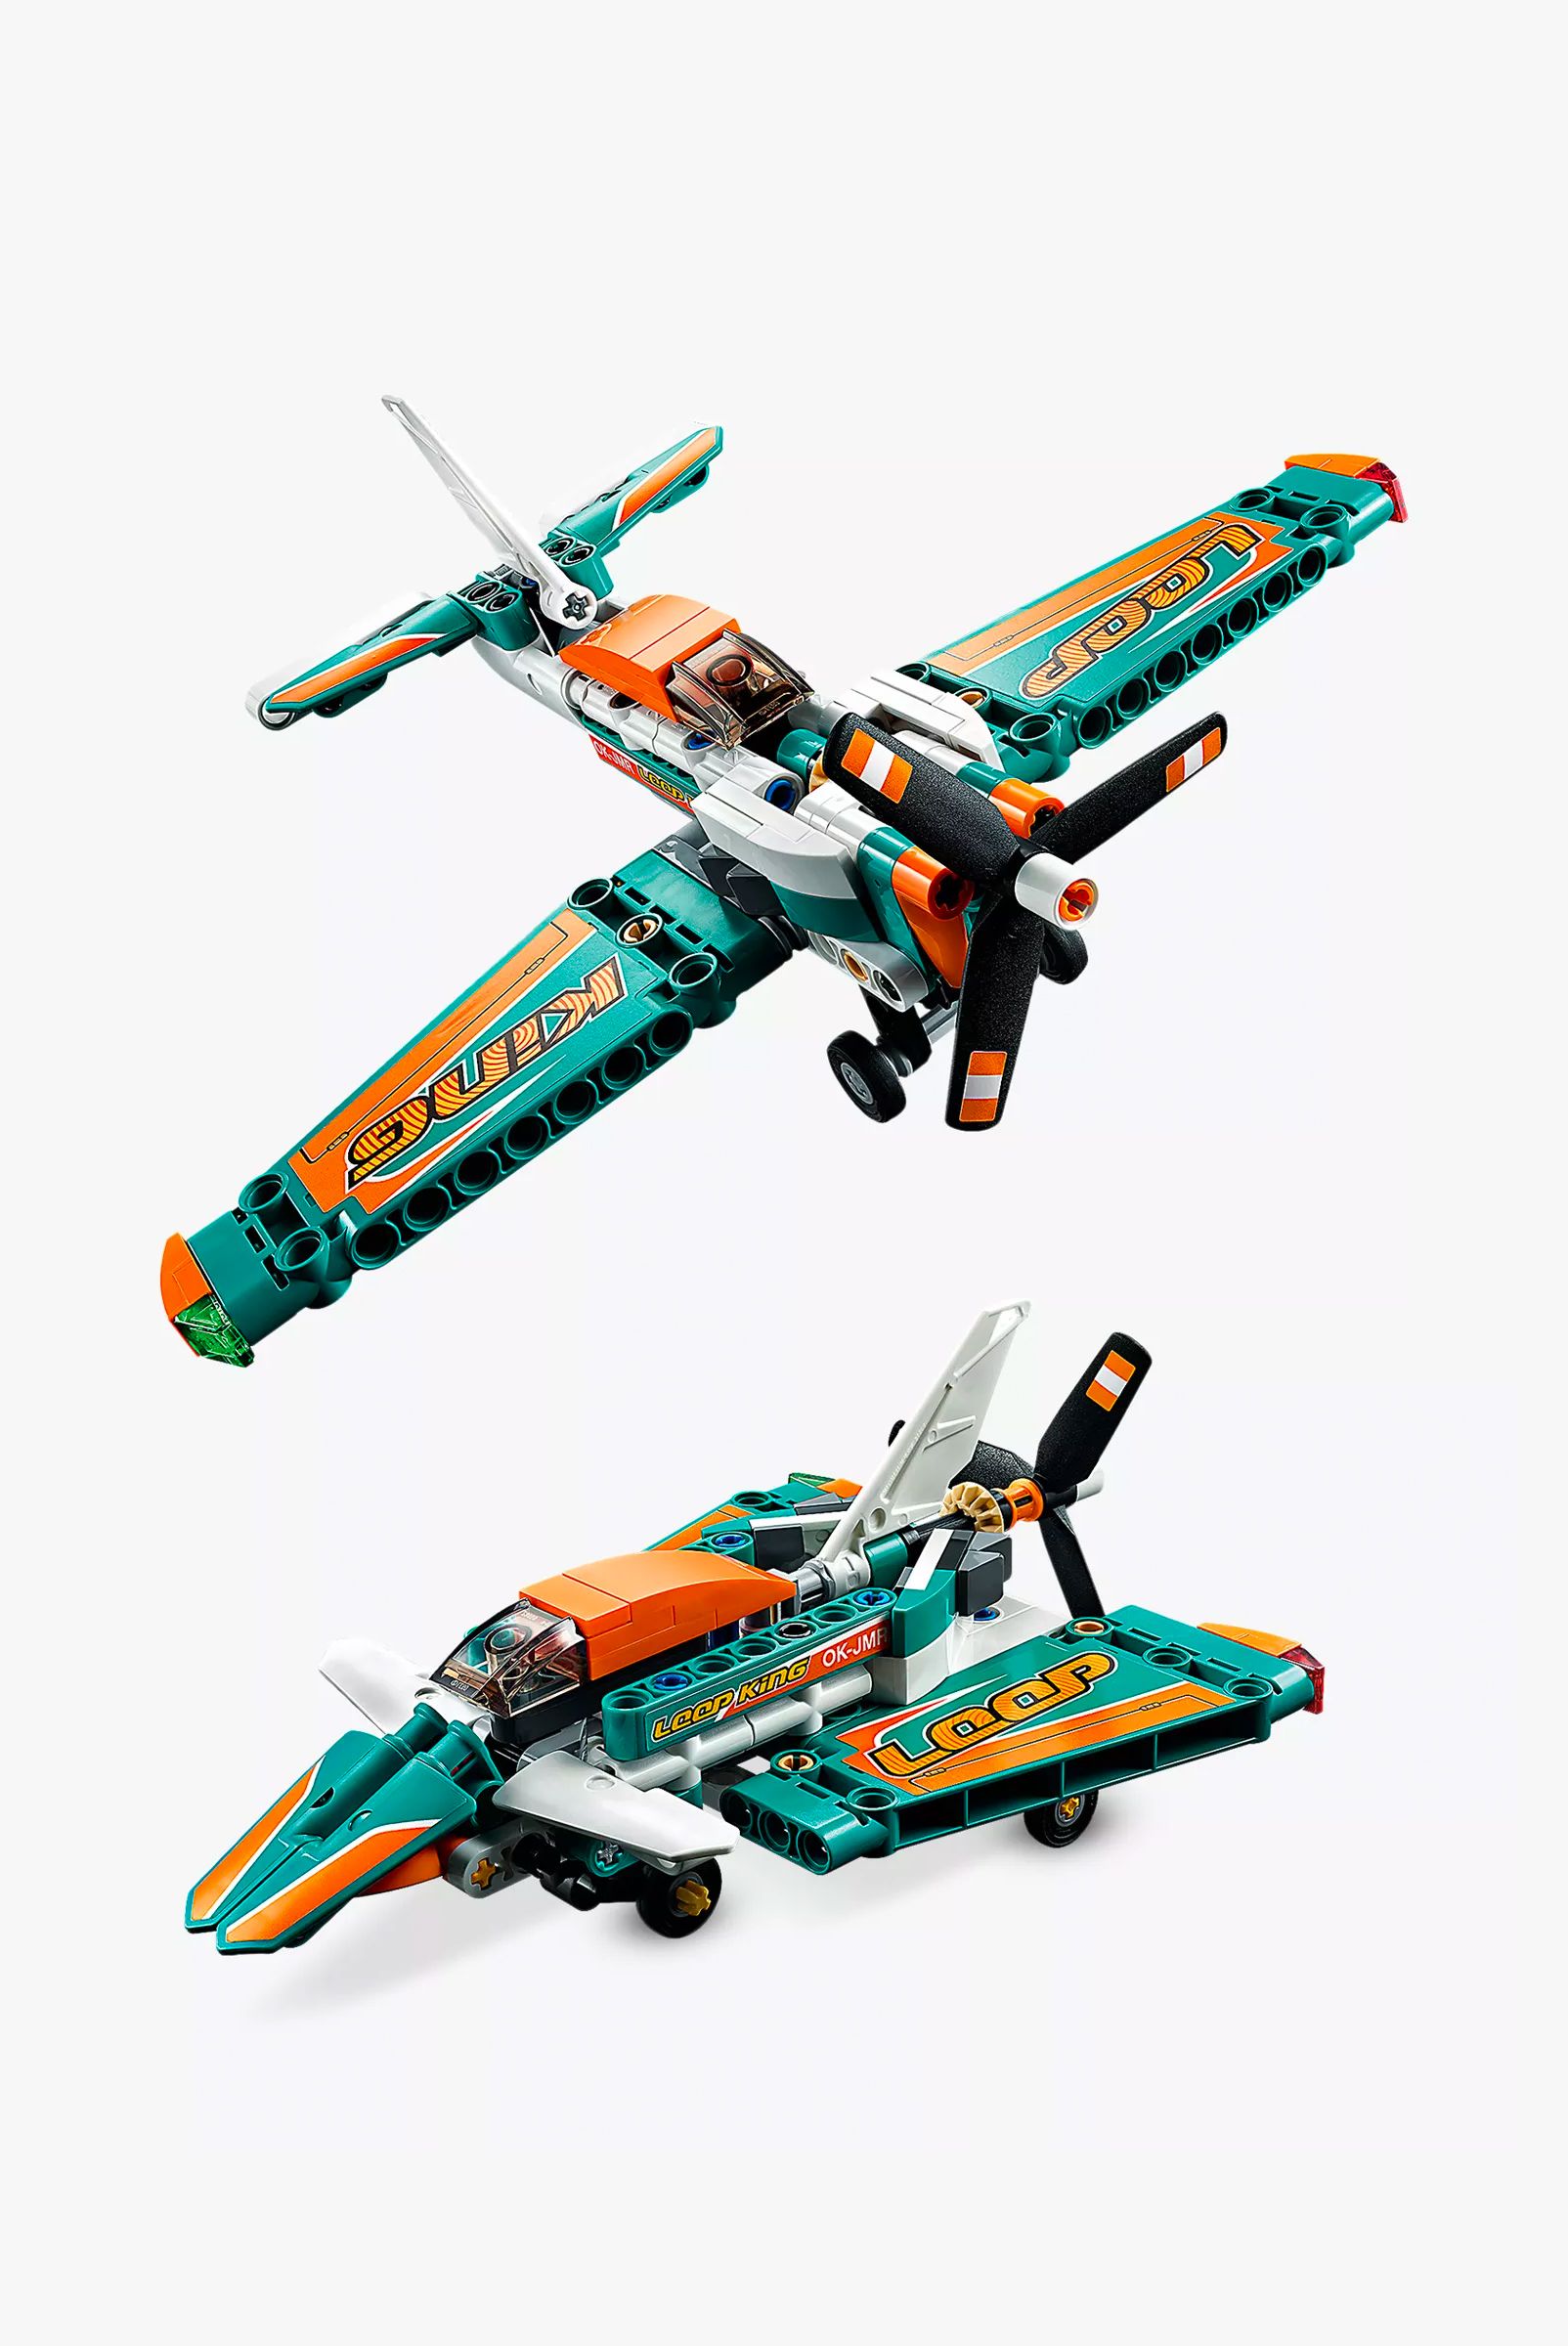 LEGO Technic 42117 Race Plane, £8.99